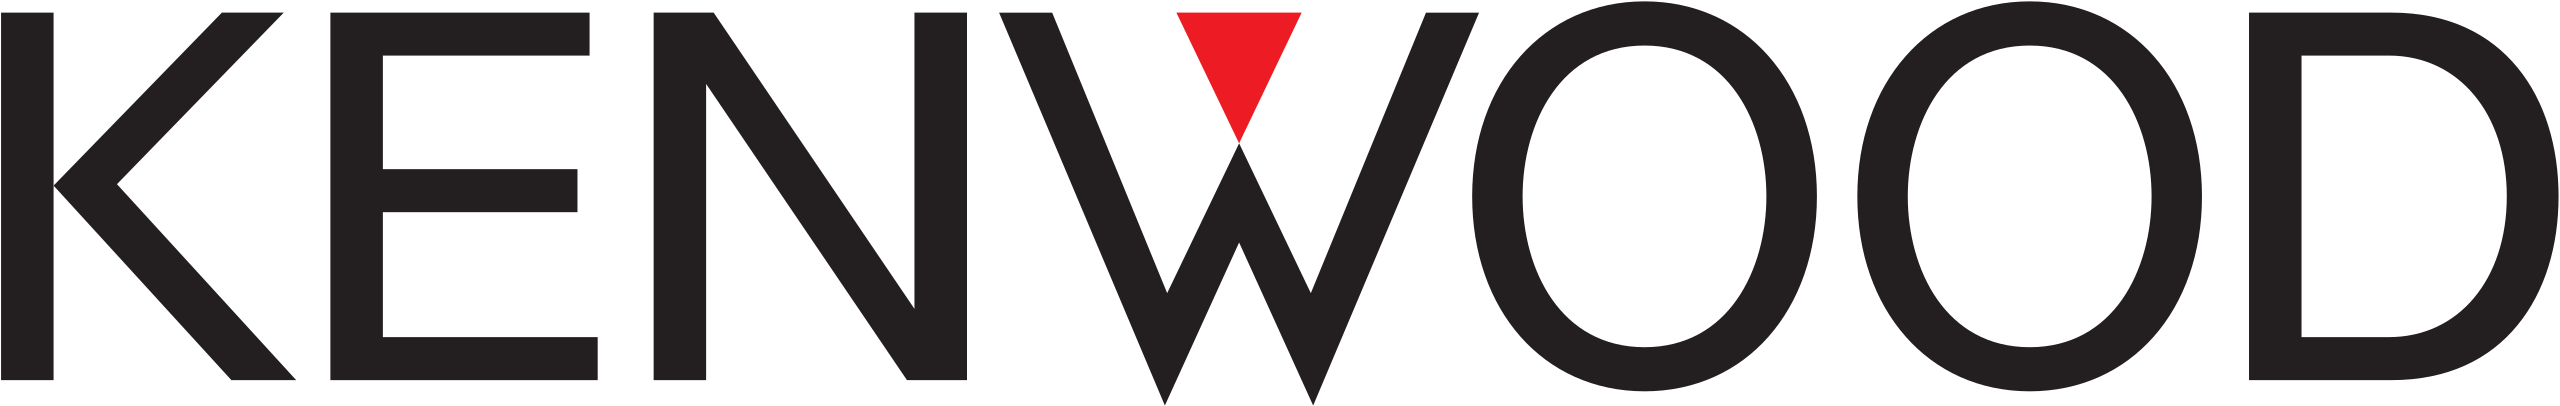 Kenwood Logo.svg